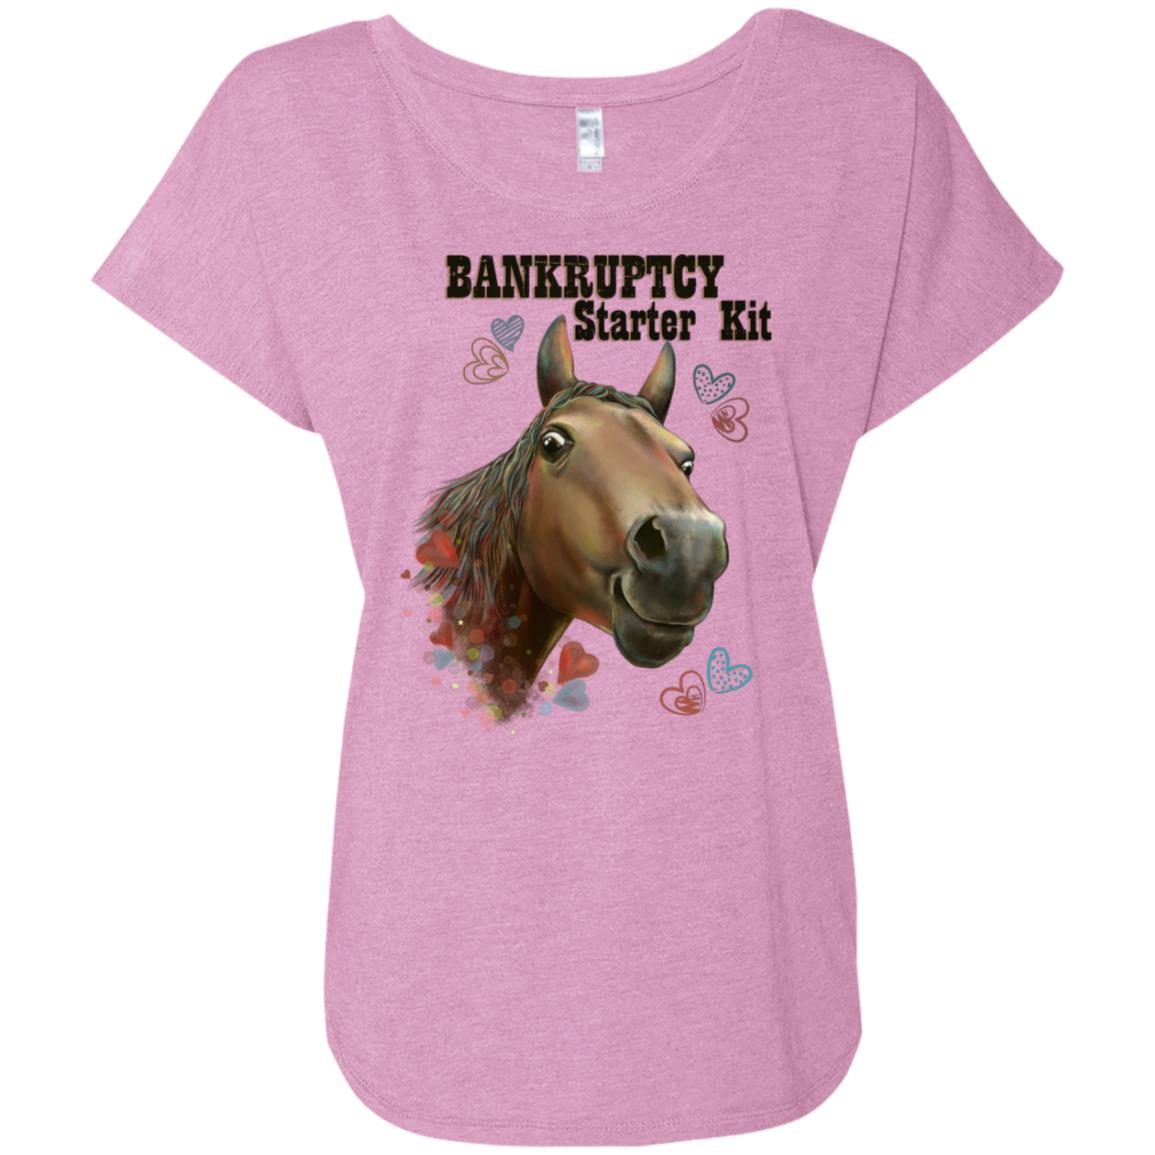 Horse T-shirt for Women, Bankruptcy Starter Kit, Funny Horse Shirt - GoneBold.gift